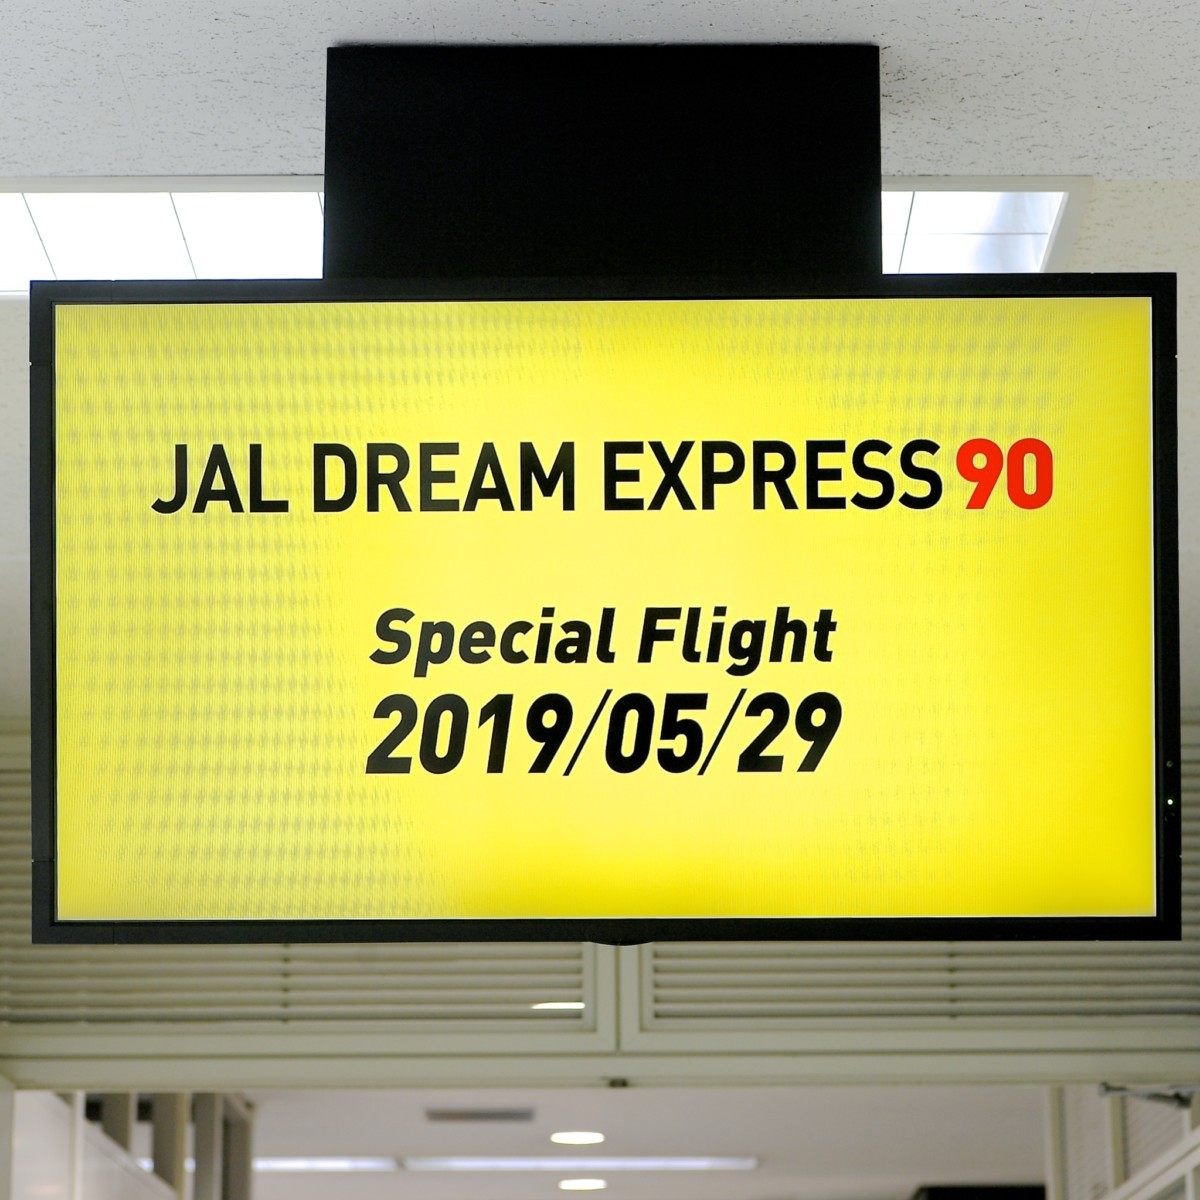 JAL DREAM EXPRESS 90｢日帰りチャーターフライトツアー｣　ディスプレイ